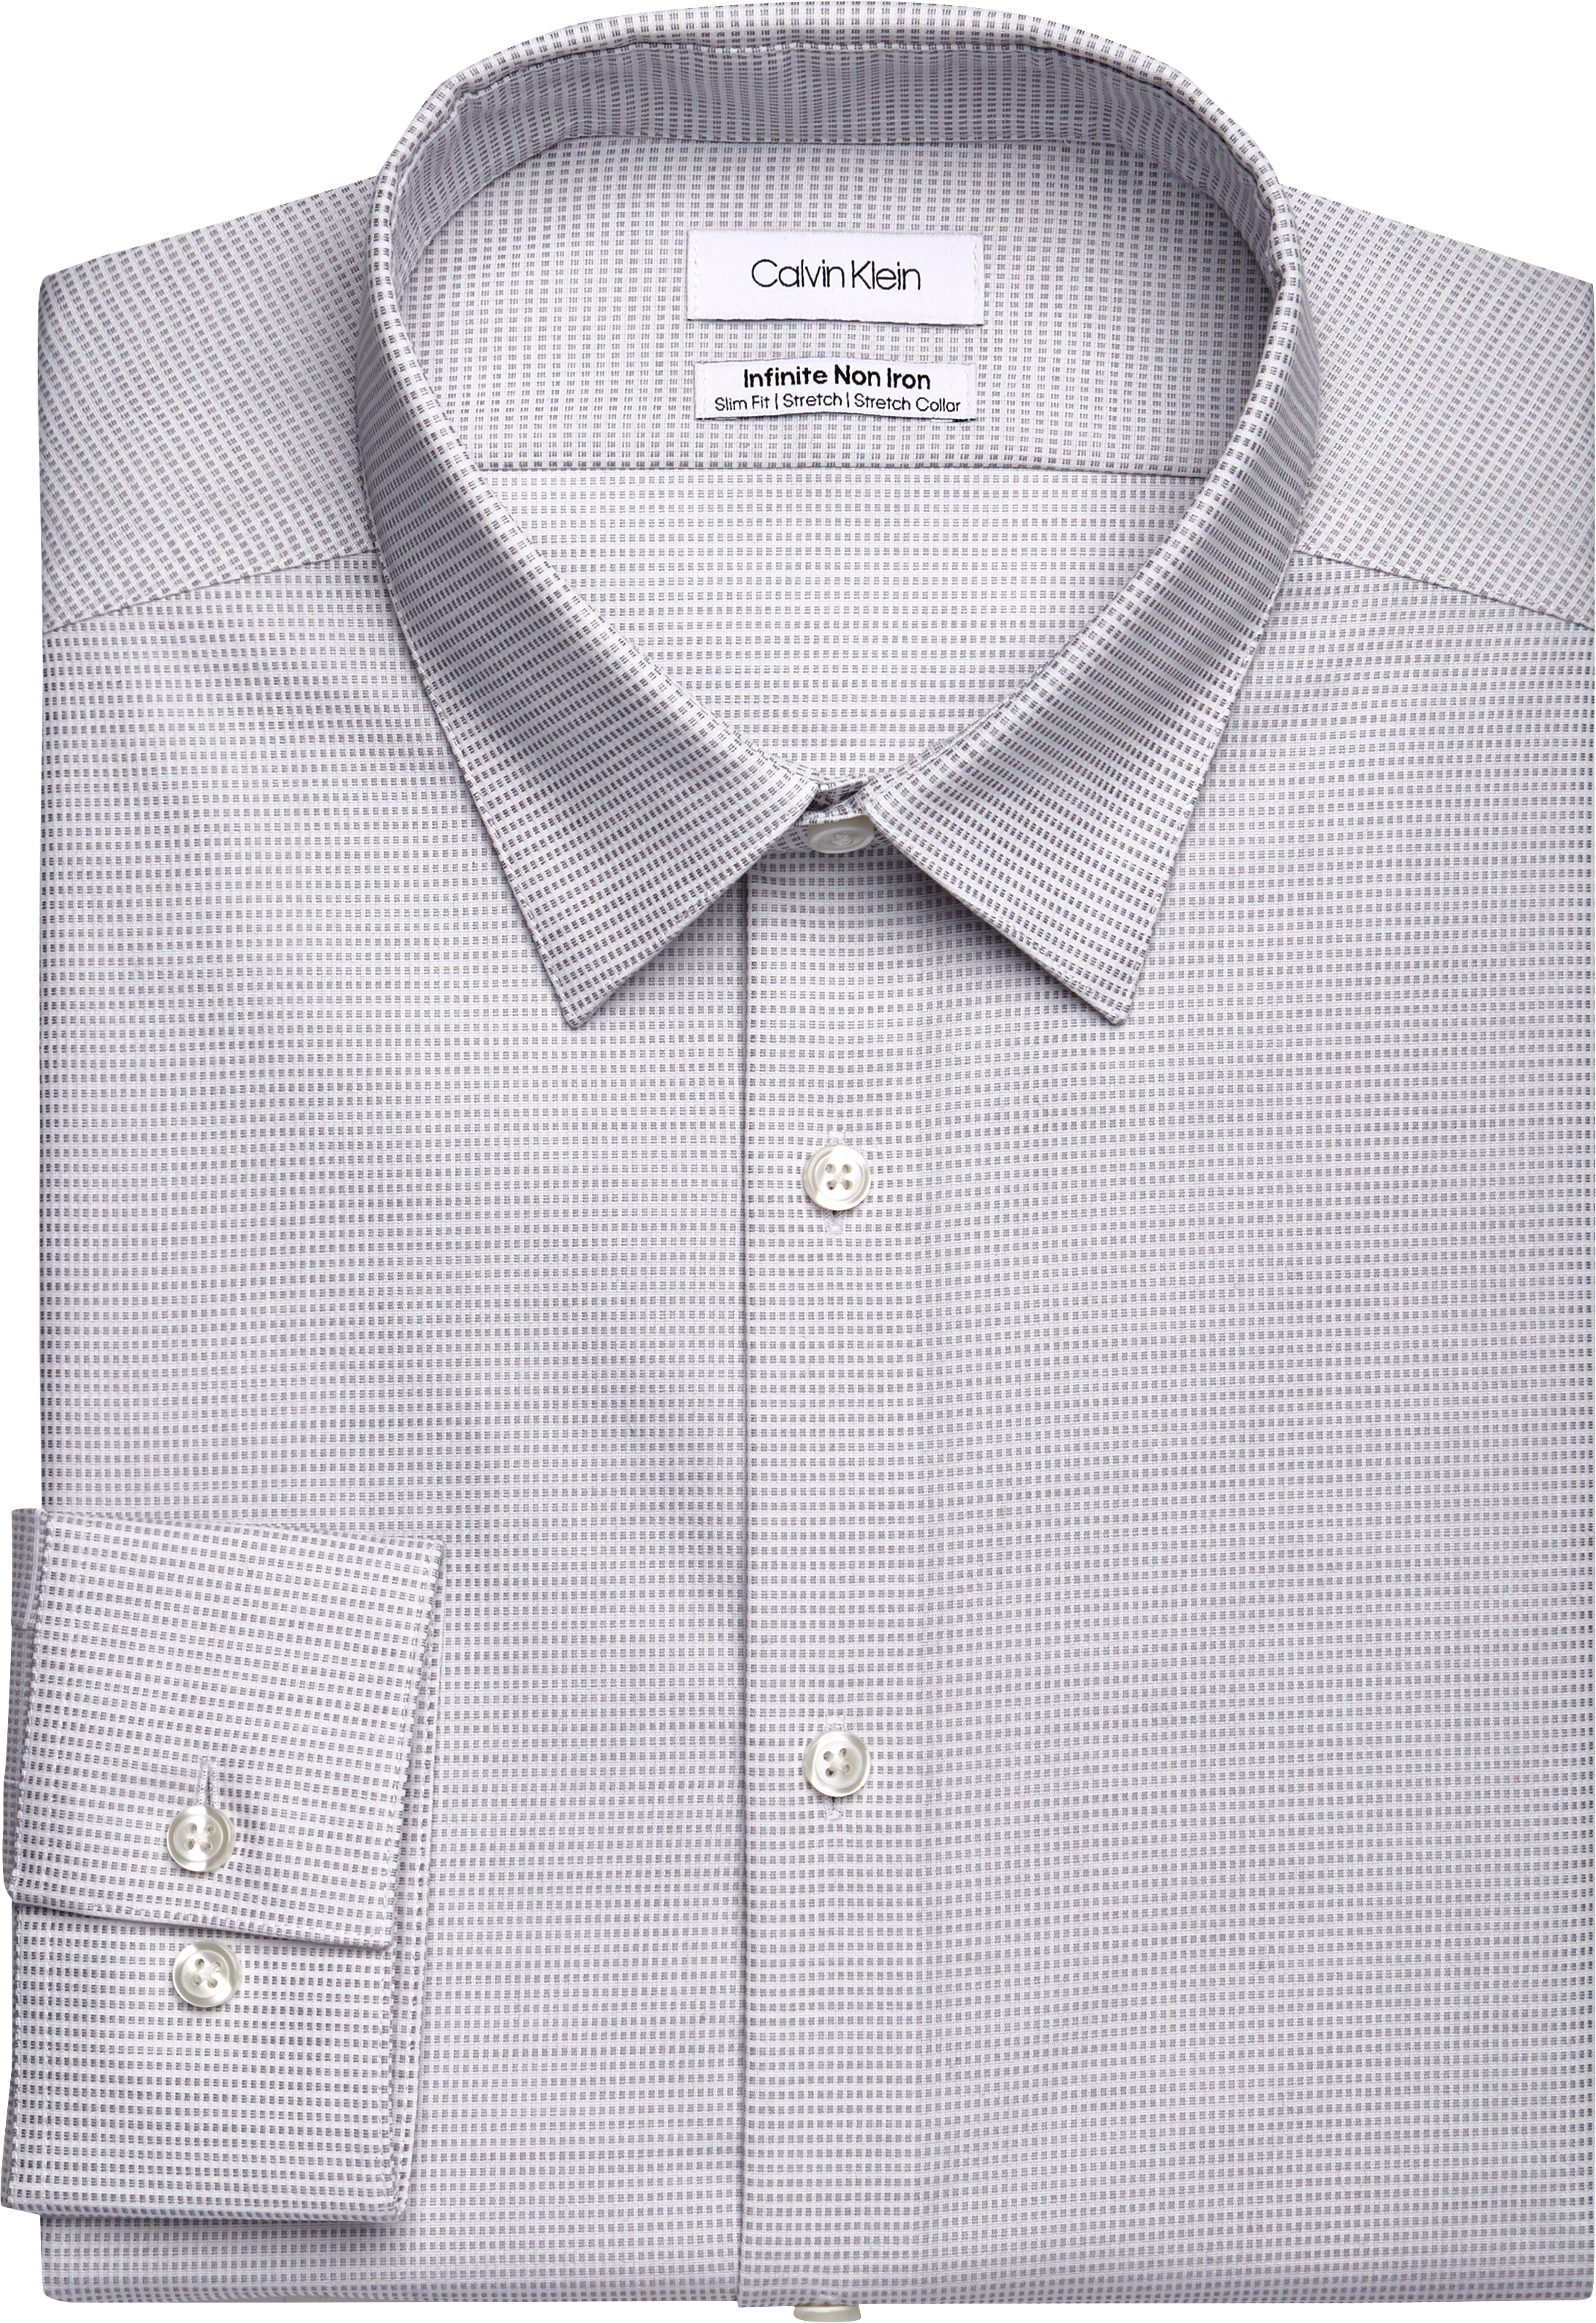 Calvin Klein Infinite Slim Fit Dress Shirt, Greystone Check - Men's Sale |  Men's Wearhouse